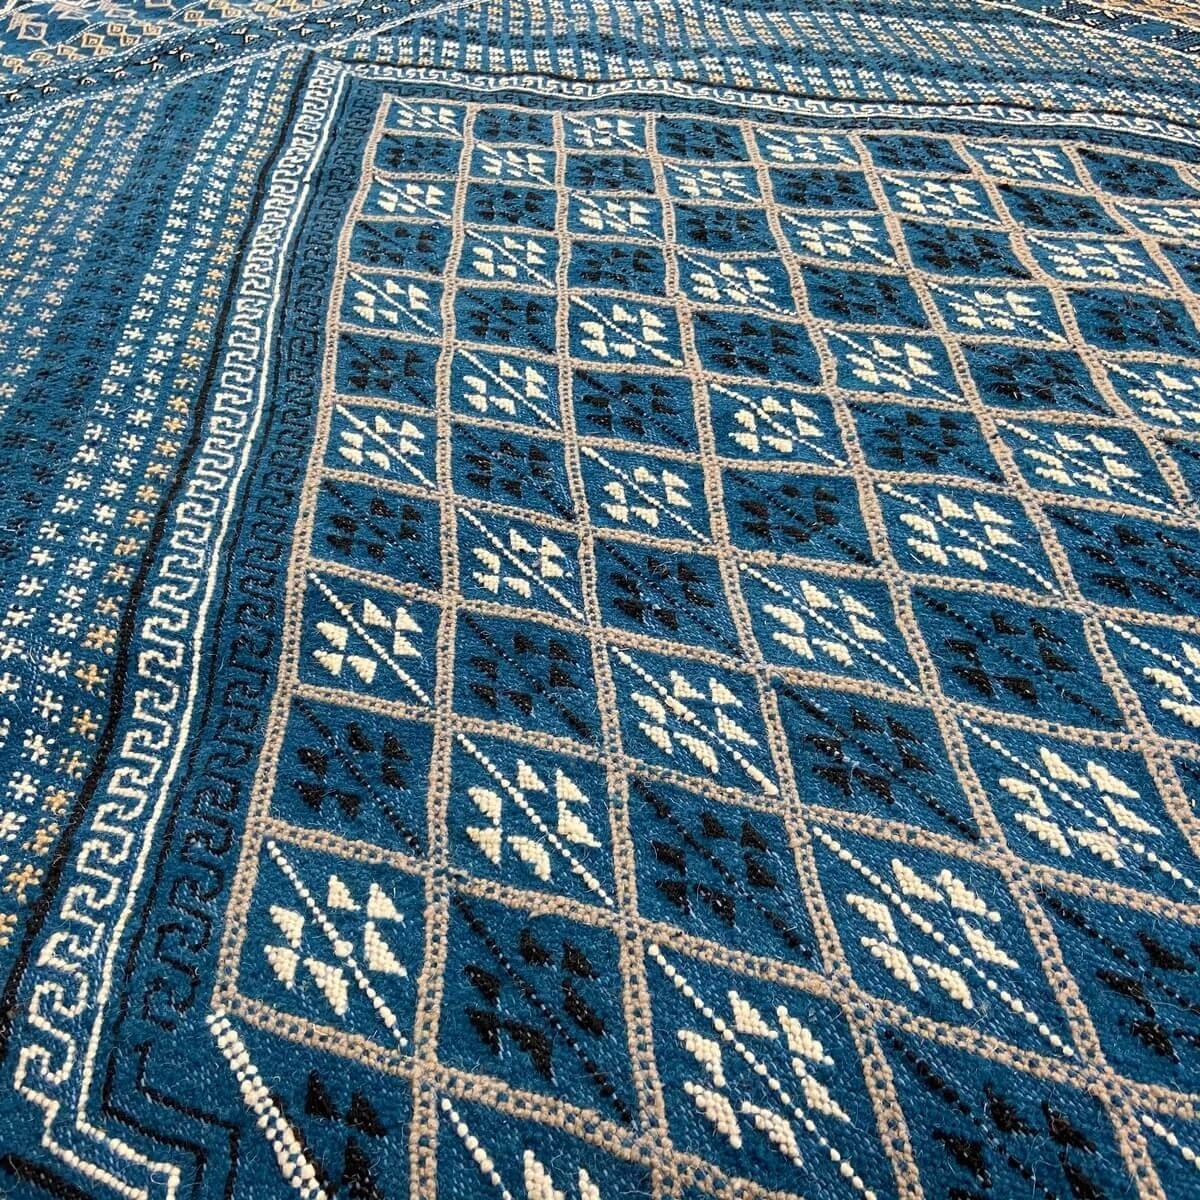 Berber tapijt Tapijt Margoum Layth 186x320 cm Blauw/Wit (Handgeweven, Wol, Tunesië) Tunesisch Margoum Tapijt uit de stad Kairoua